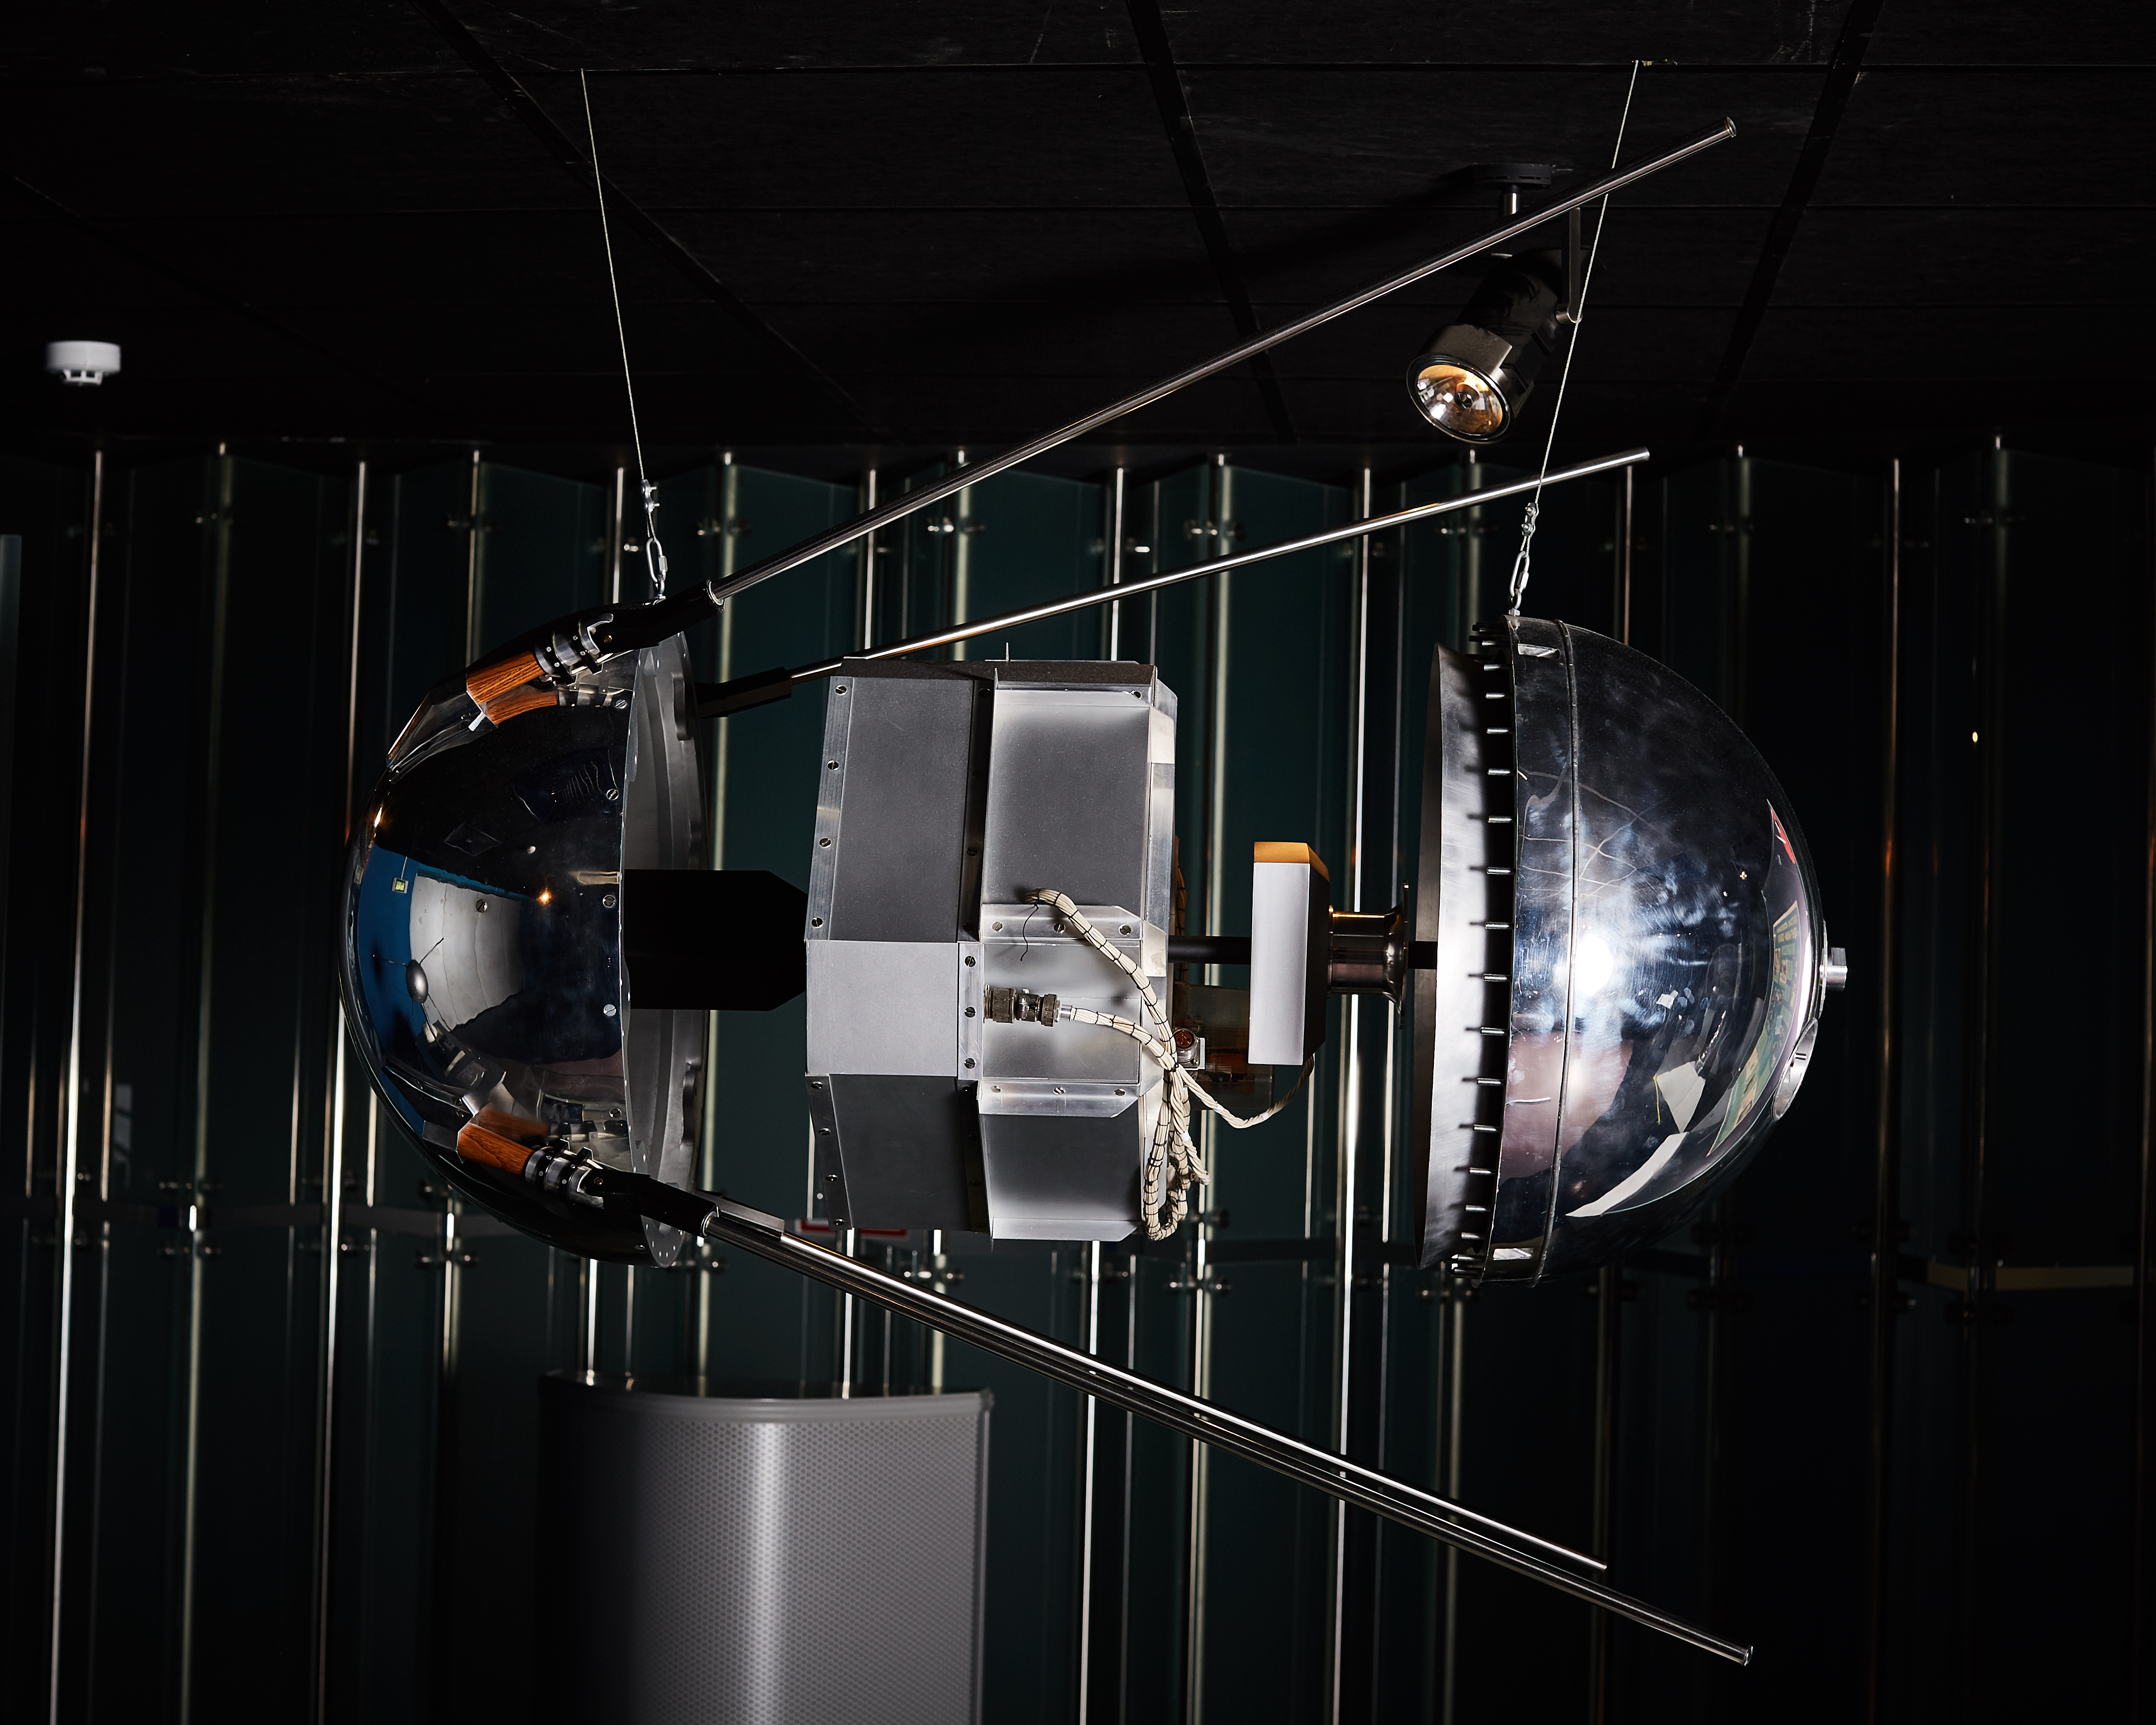 Первый спутник диаметр. Спутник земли 1957. Первый искусственный Спутник земли 1957. Спутник 1. Спутник Авангард-1.